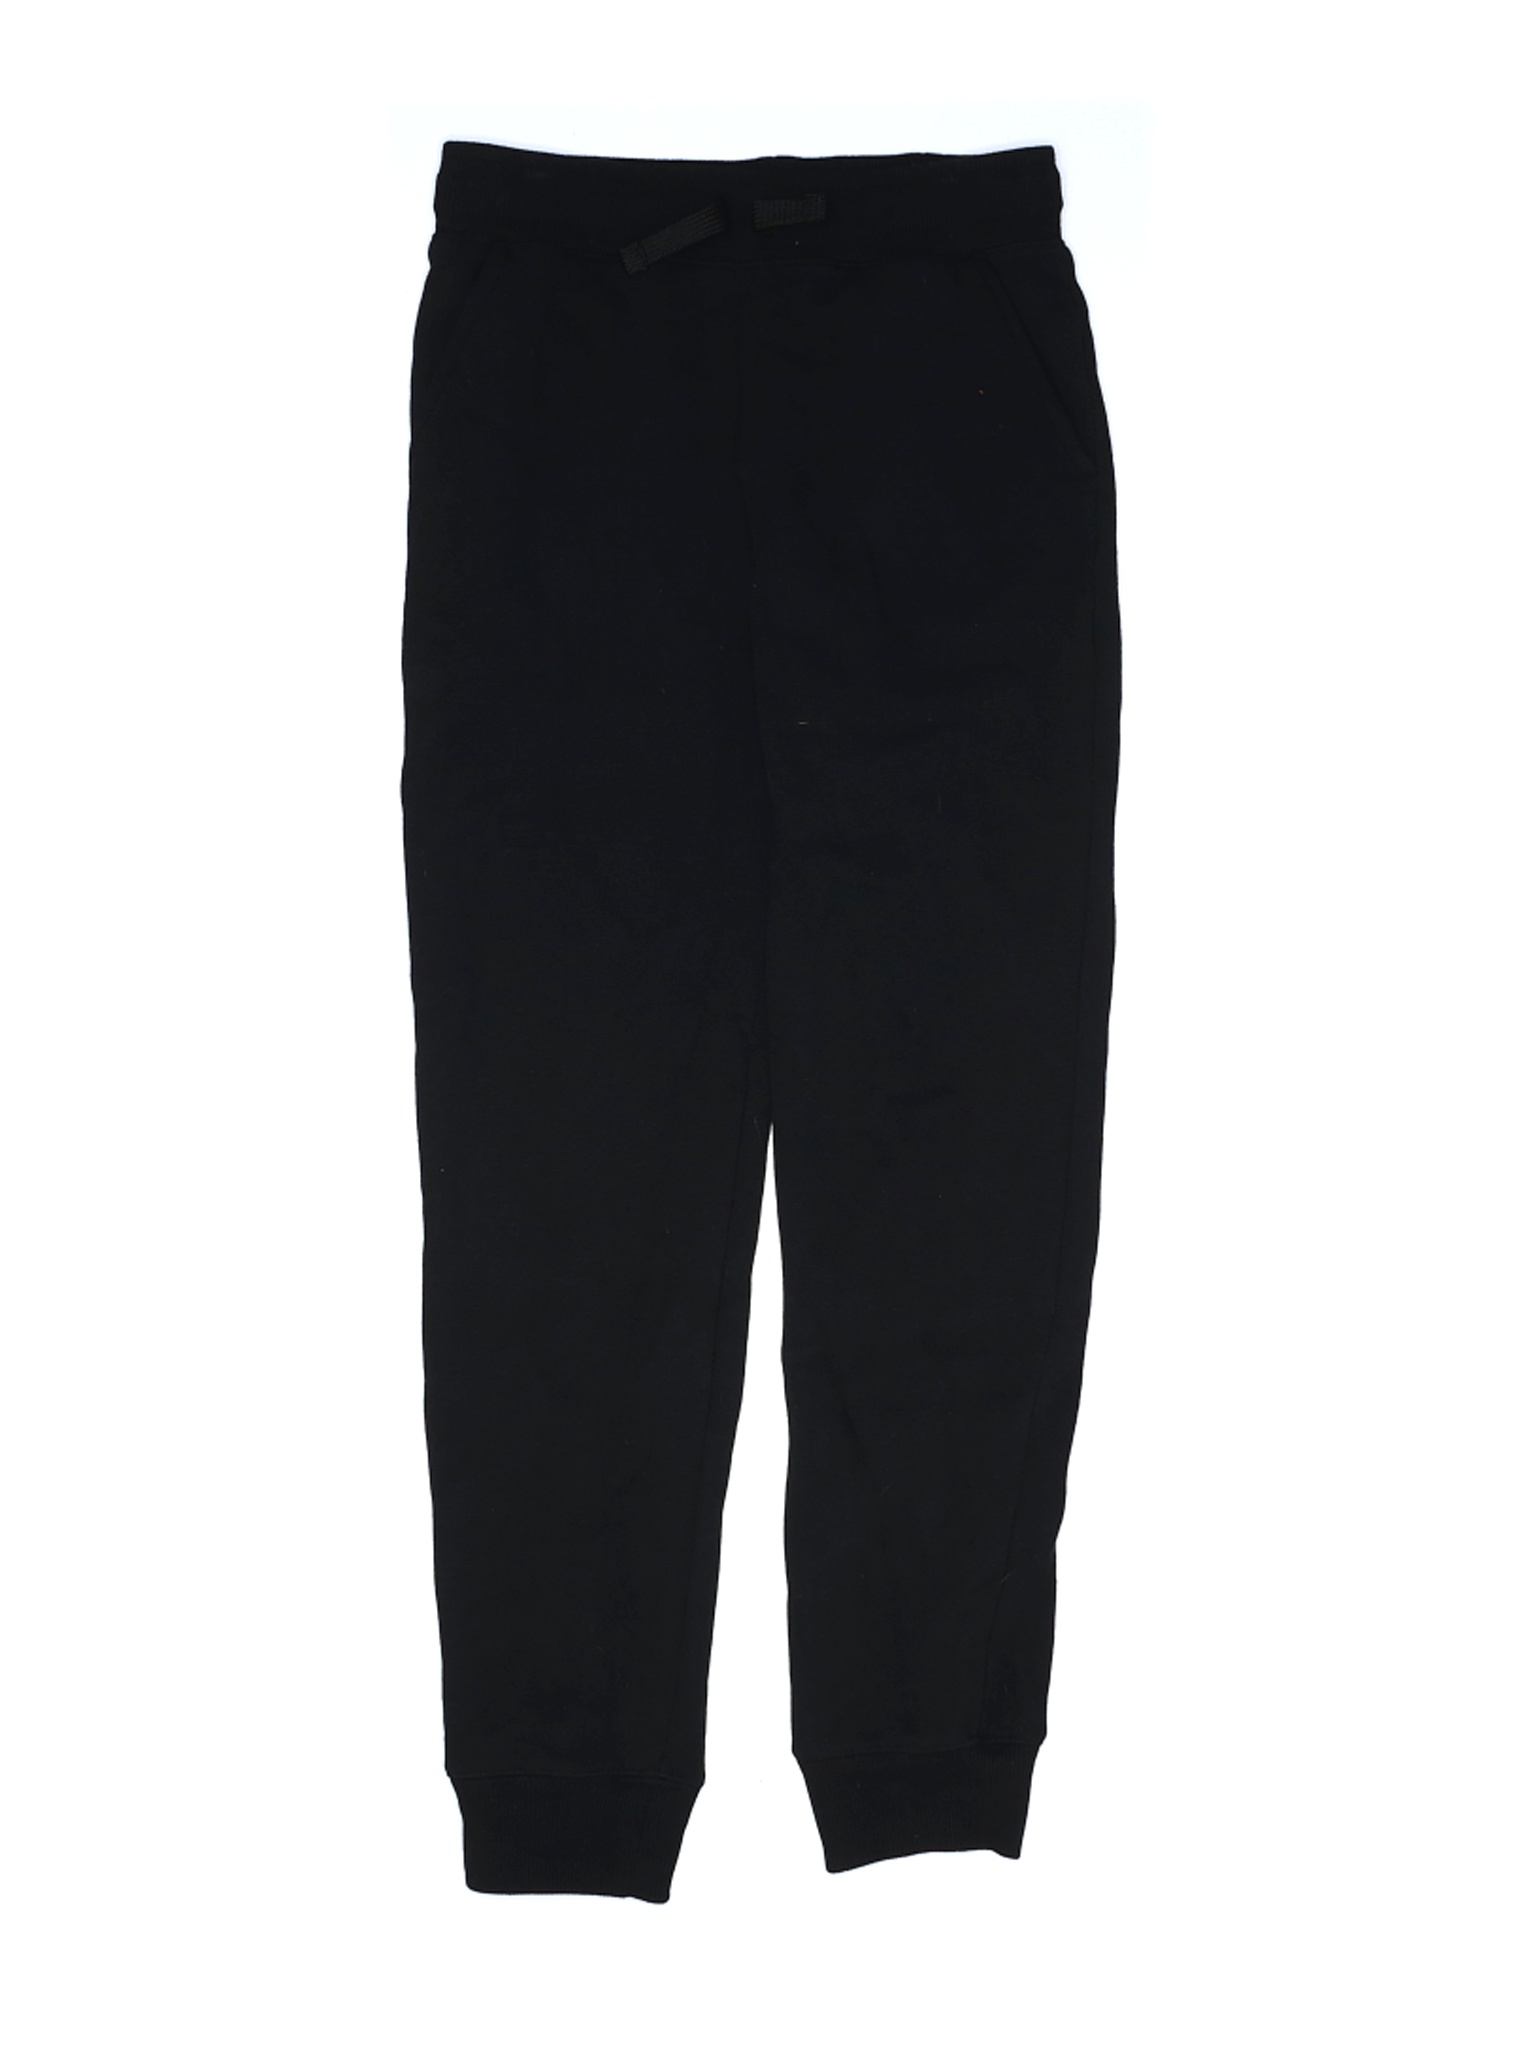 Amazon Essentials Girls Black Sweatpants 12 | eBay